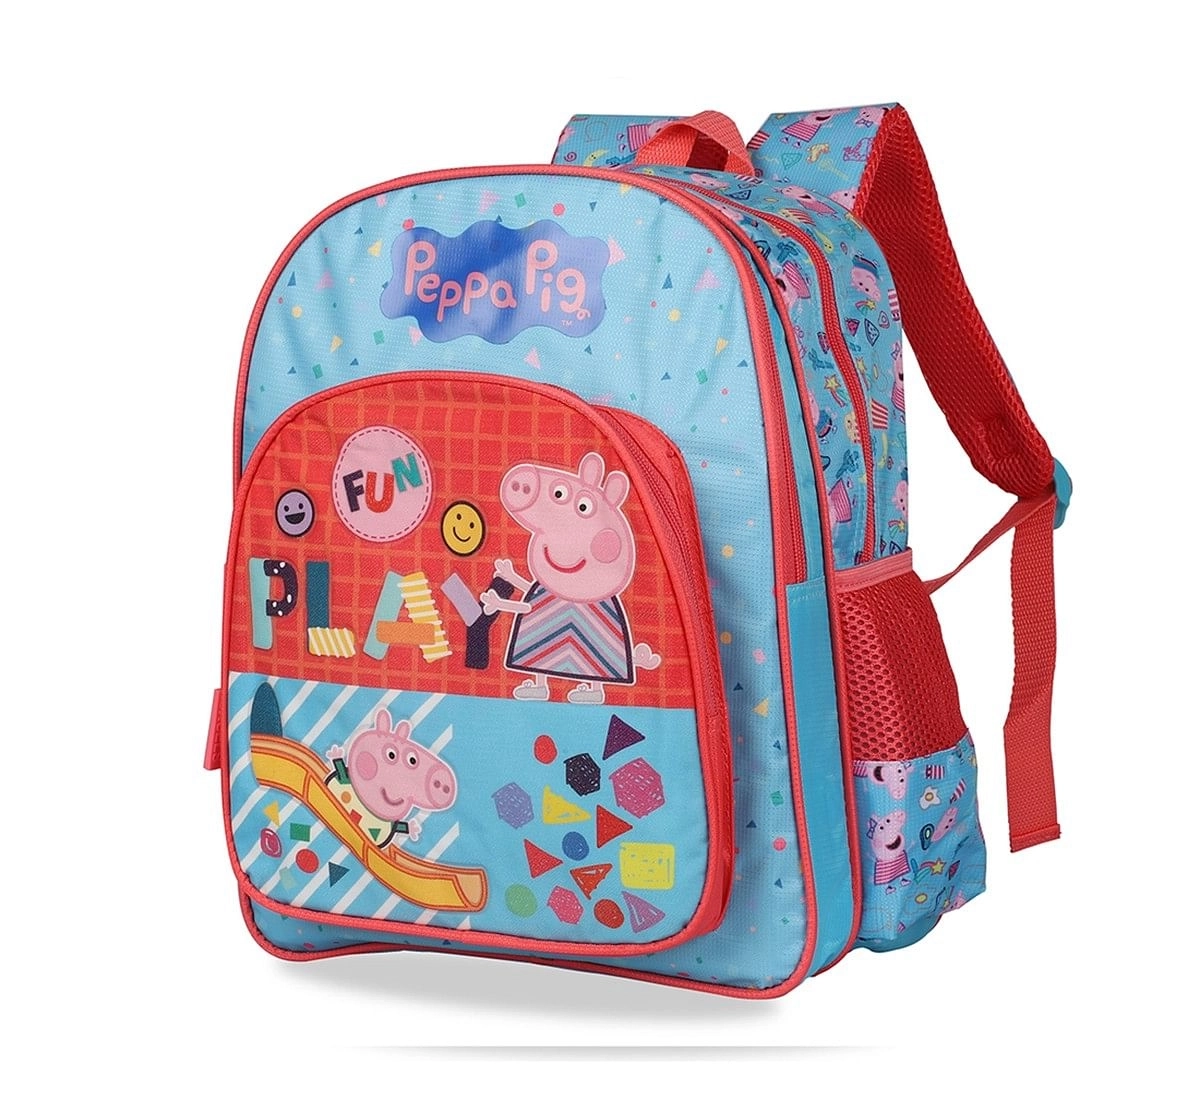 Peppa Pig Fun Play School Bag 36 Cm  for Kids age 3Y+ 